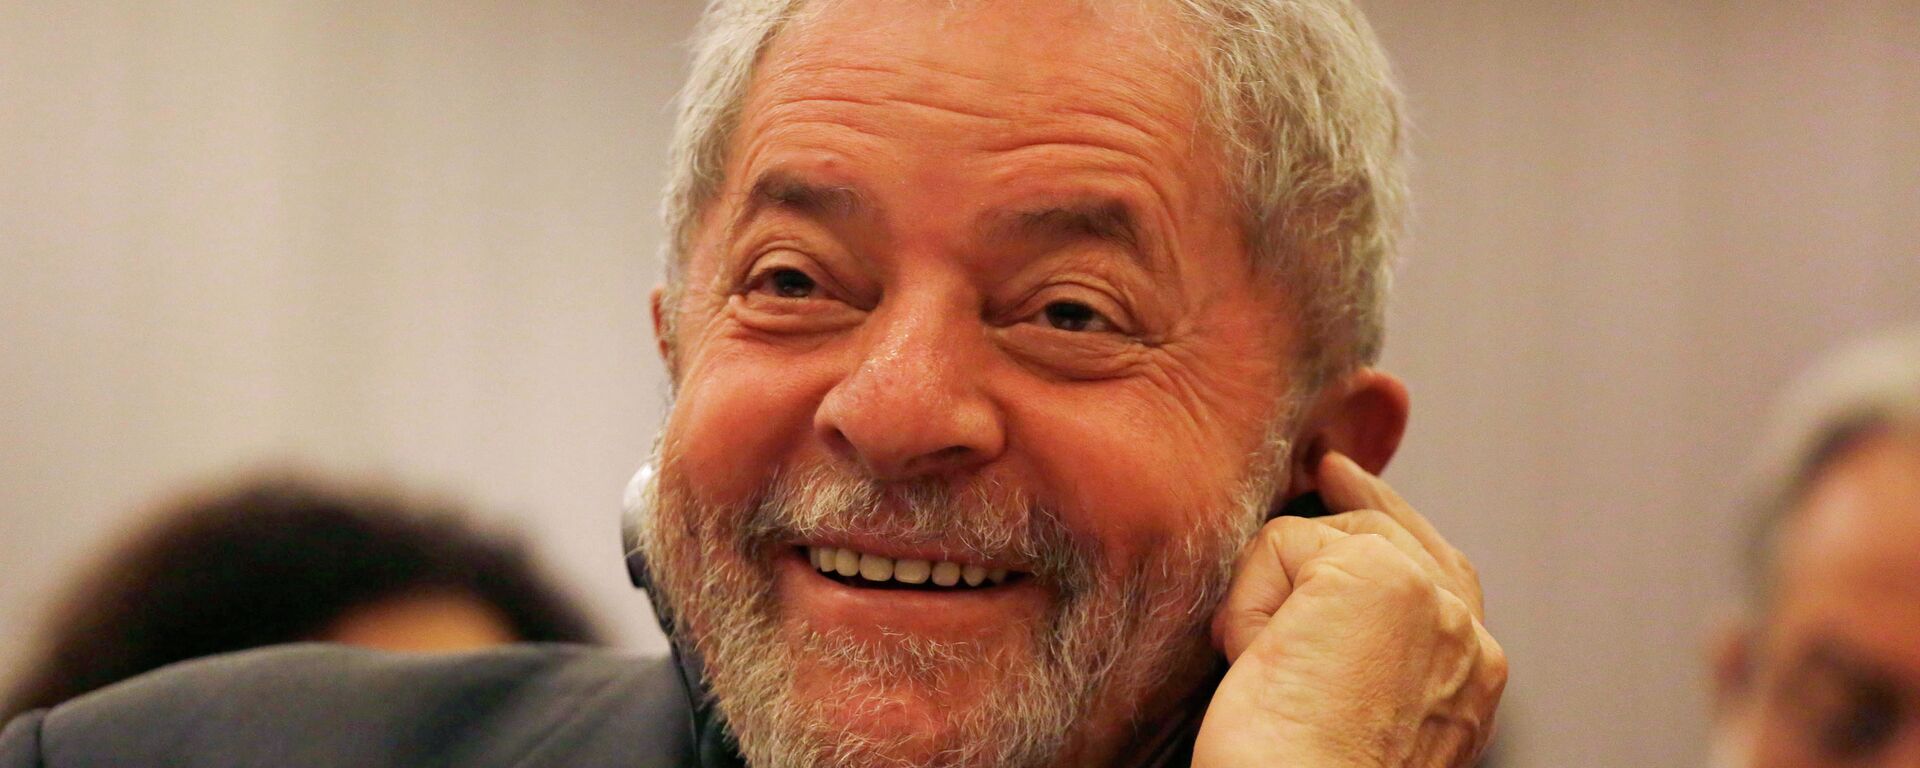 El expresidente de Brasil,  Lula da Silva - Sputnik Mundo, 1920, 16.12.2021